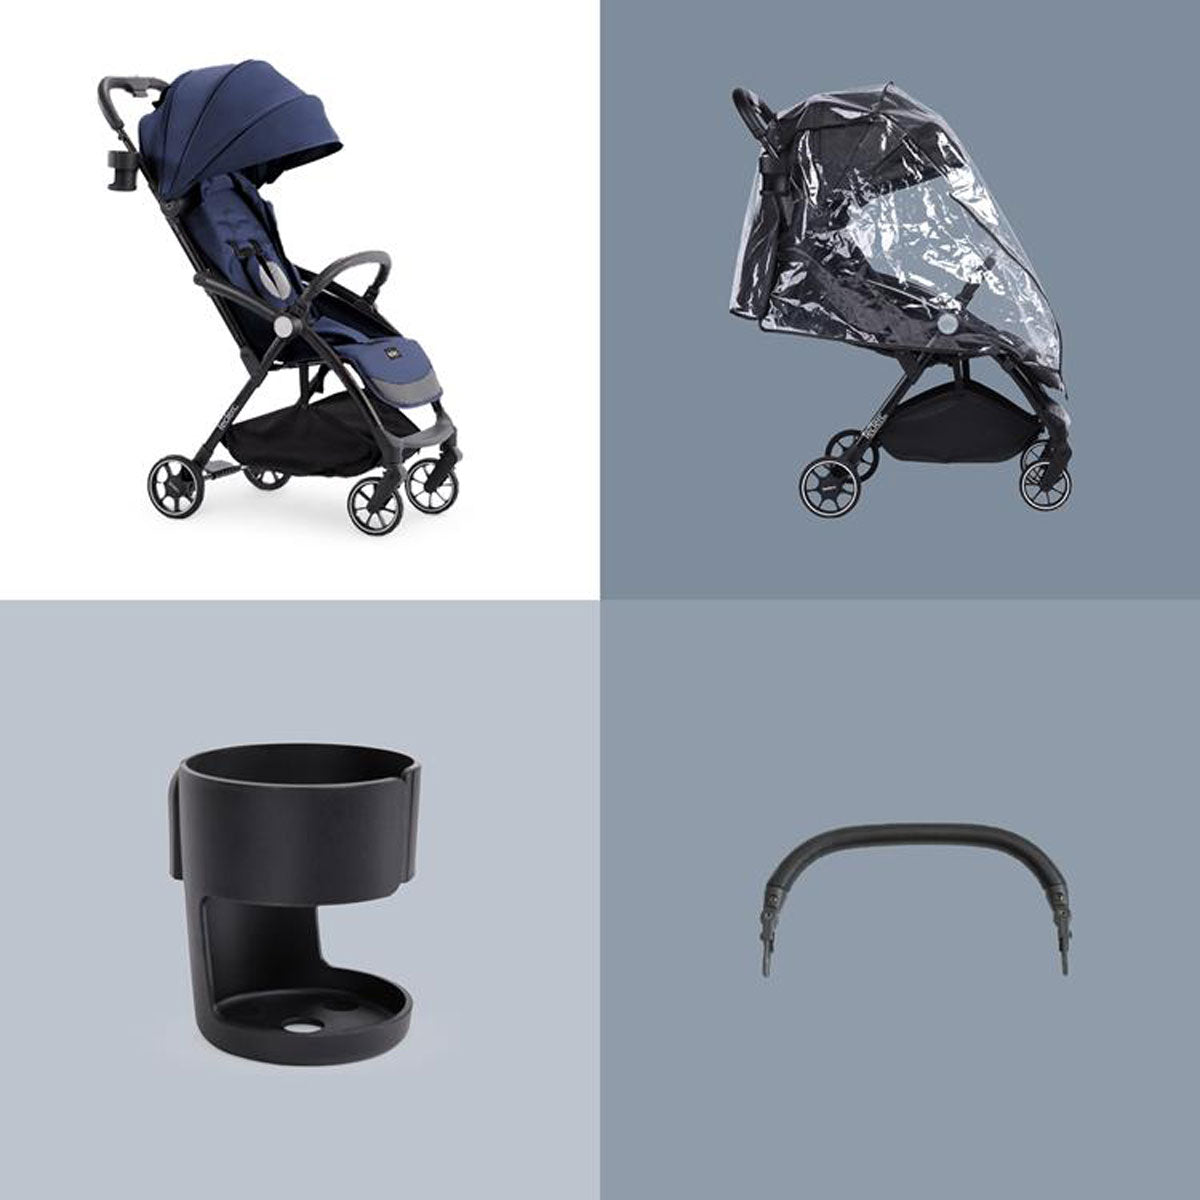 Leclercbaby MF Plus Baby stroller Blue